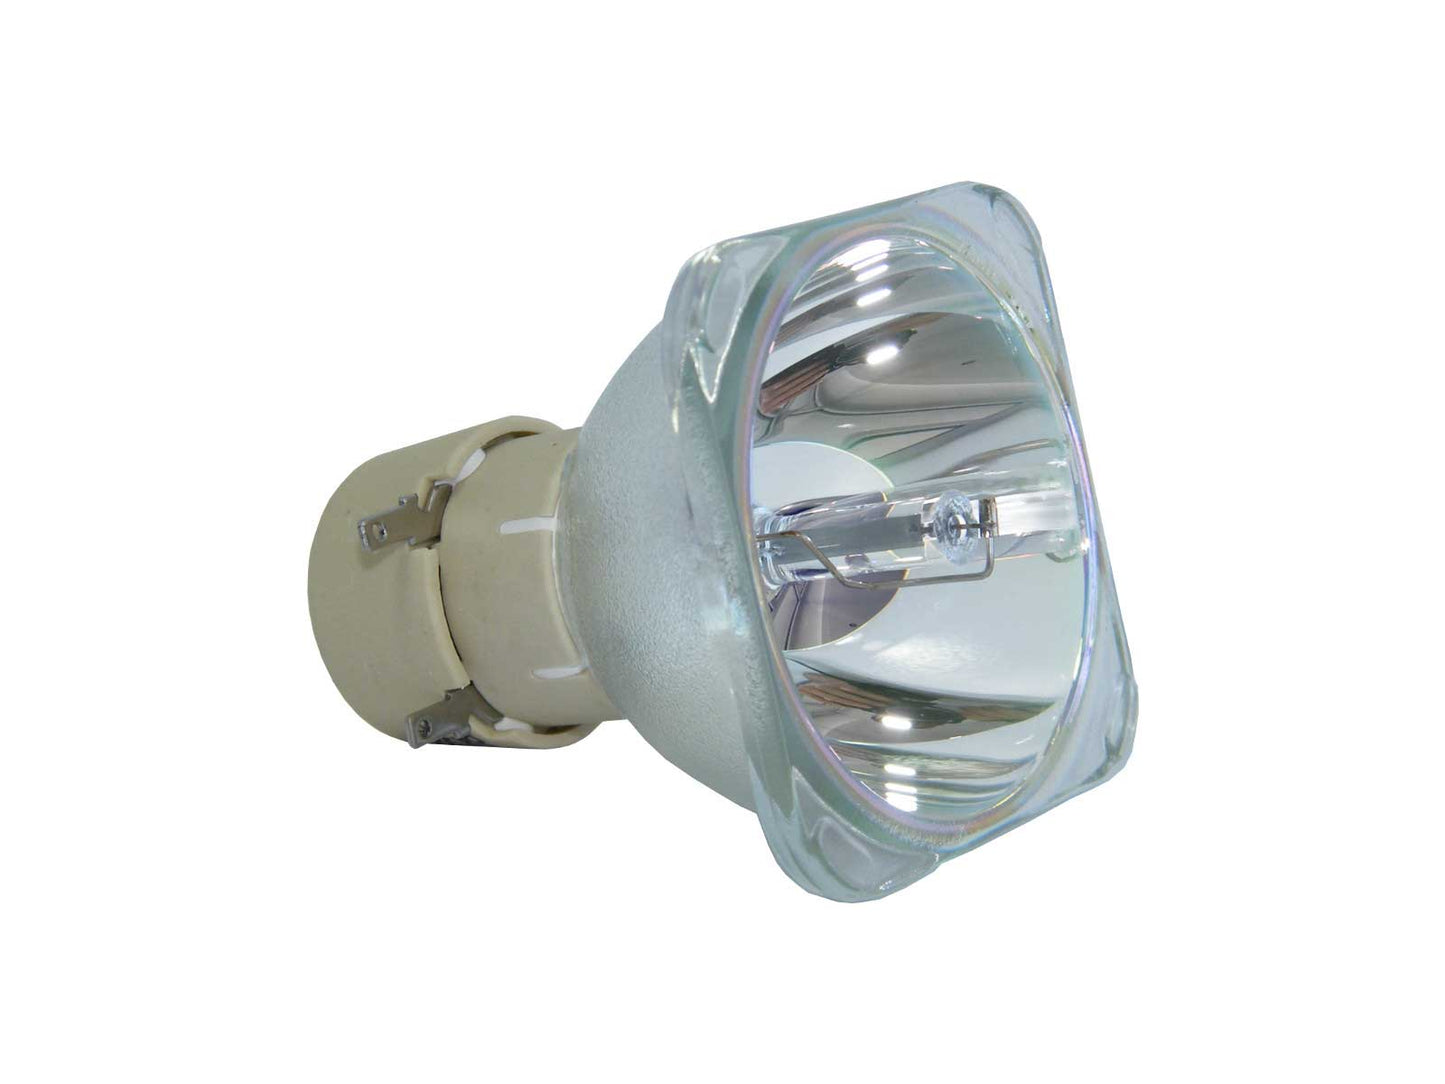 azurano Beamerlampe für RICOH 513744 TYPE27 Ersatzlampe Projektorlampe - Bild 1